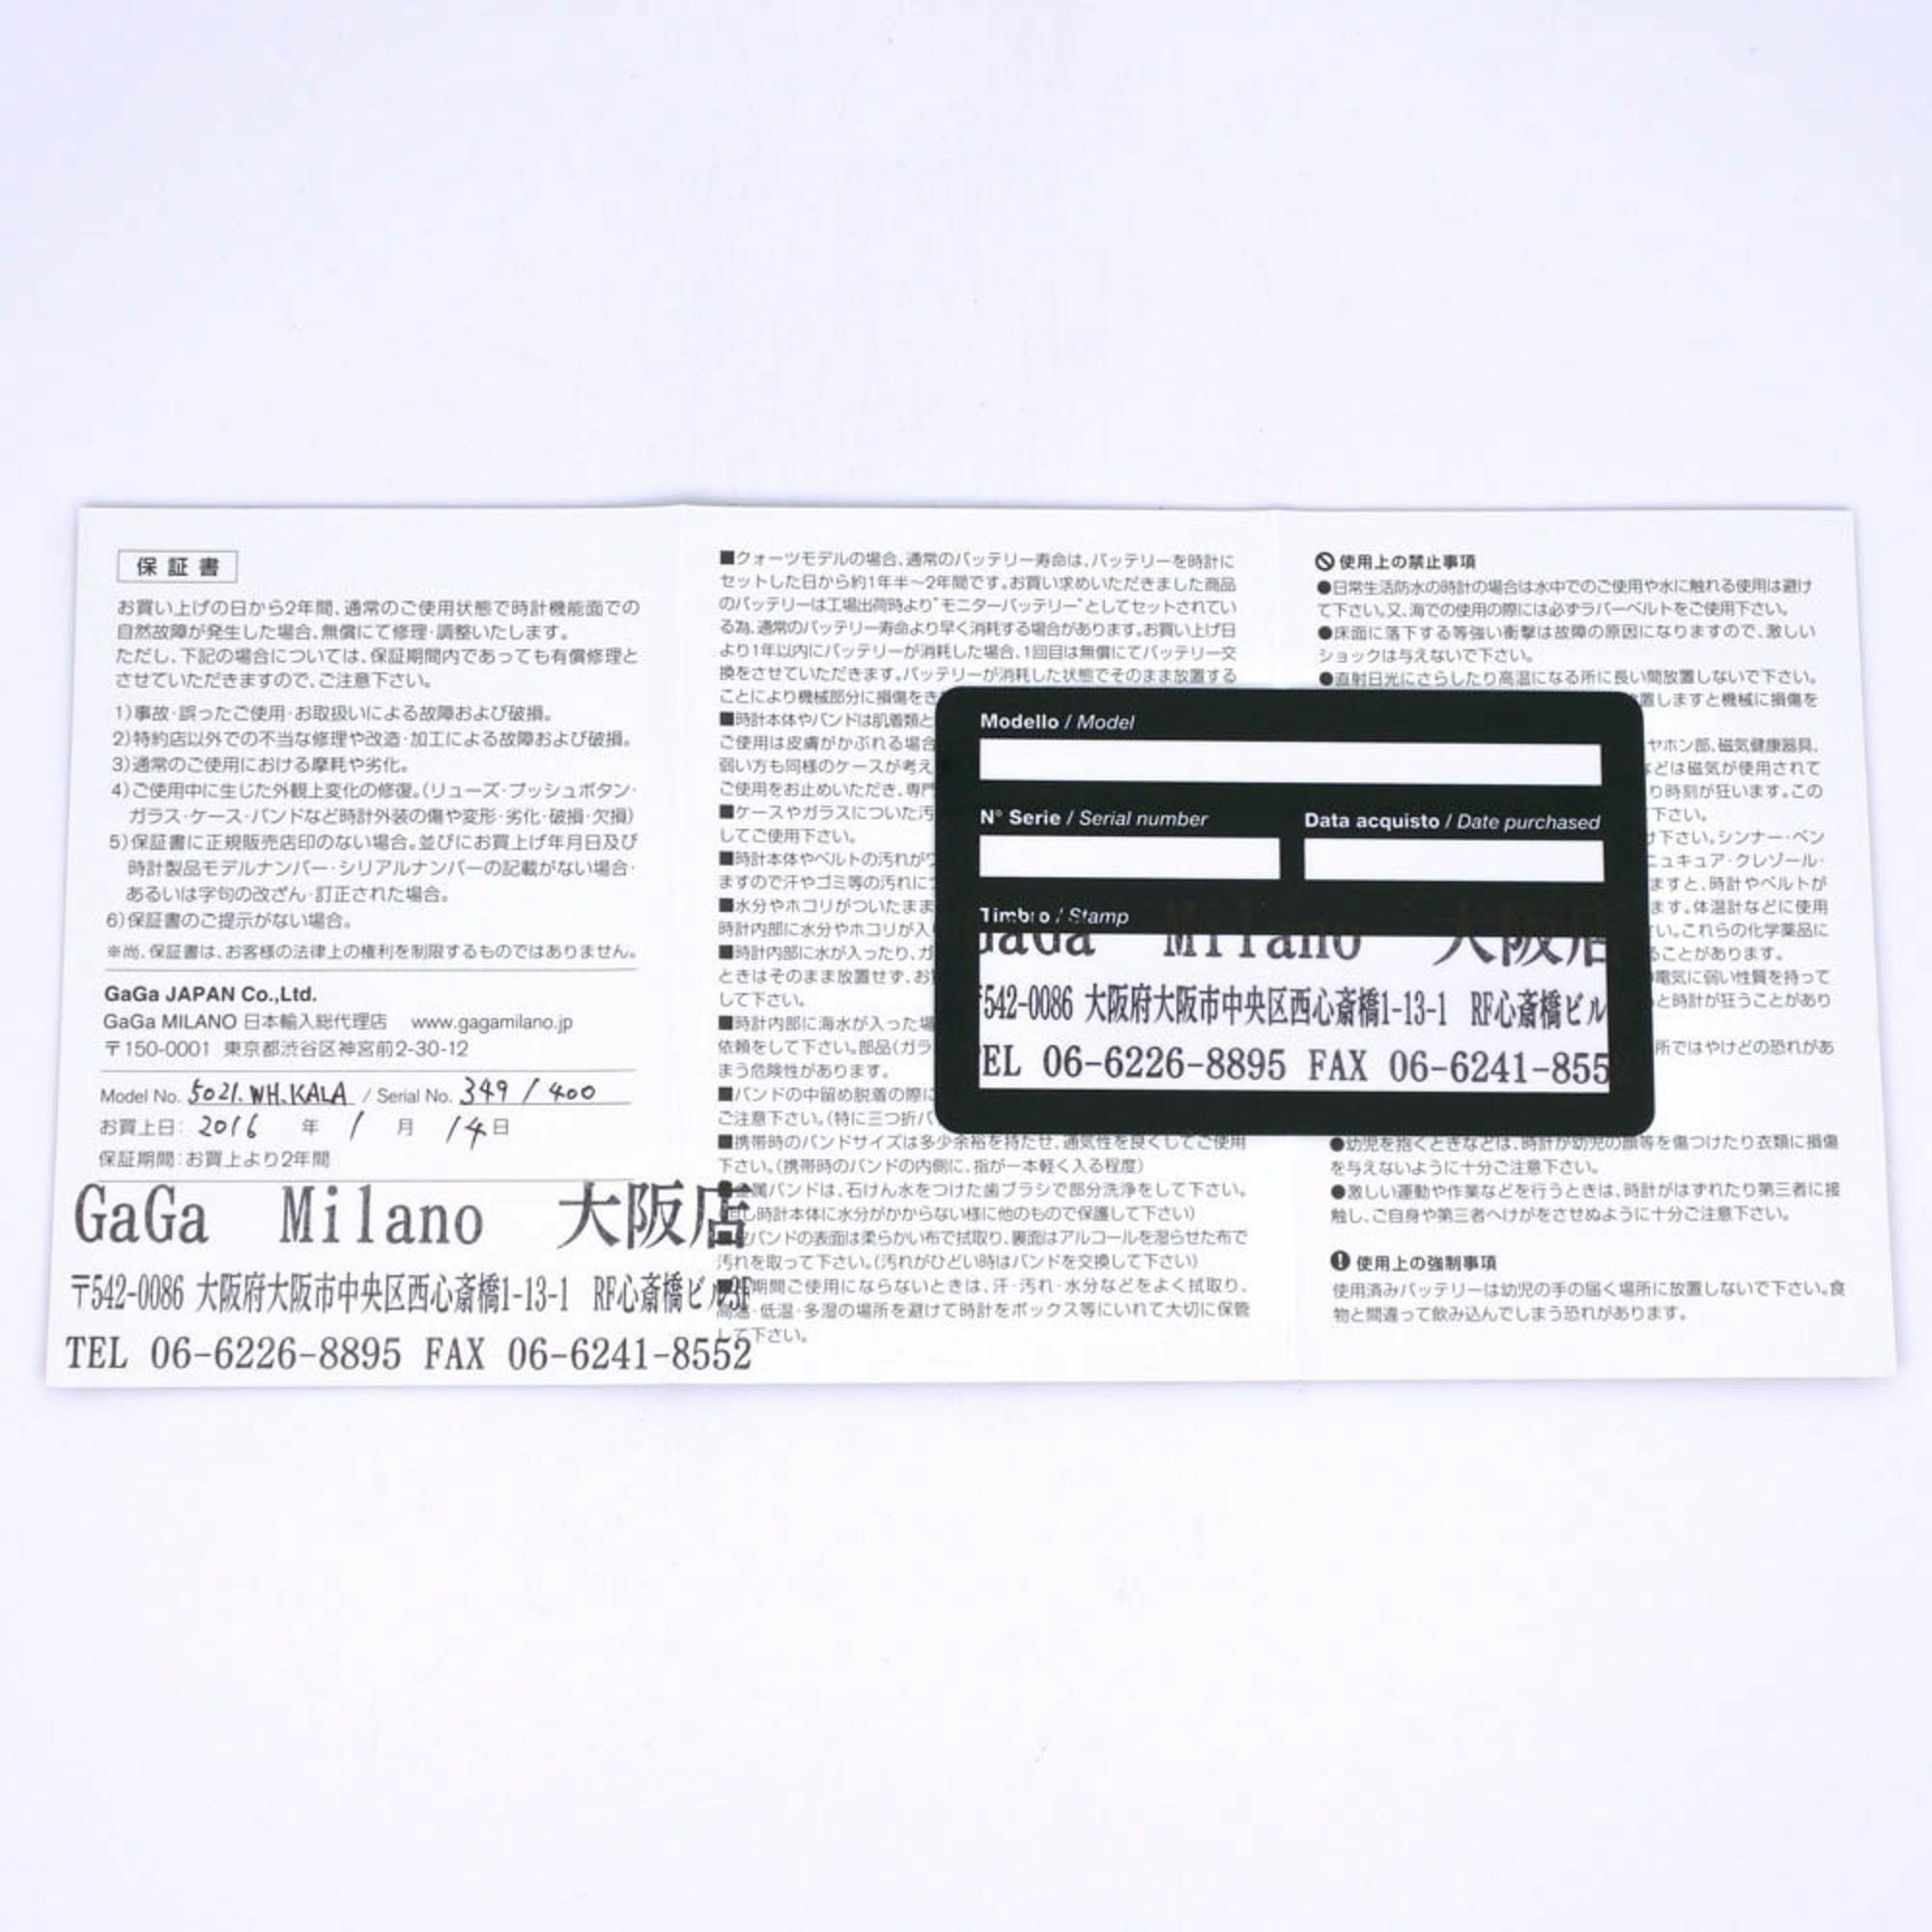 Gaga Milano Manuale 40 Watch 5012.WH.KALA Stainless Steel x Leather Pink Quartz Analog Display White Dial Manure Unisex